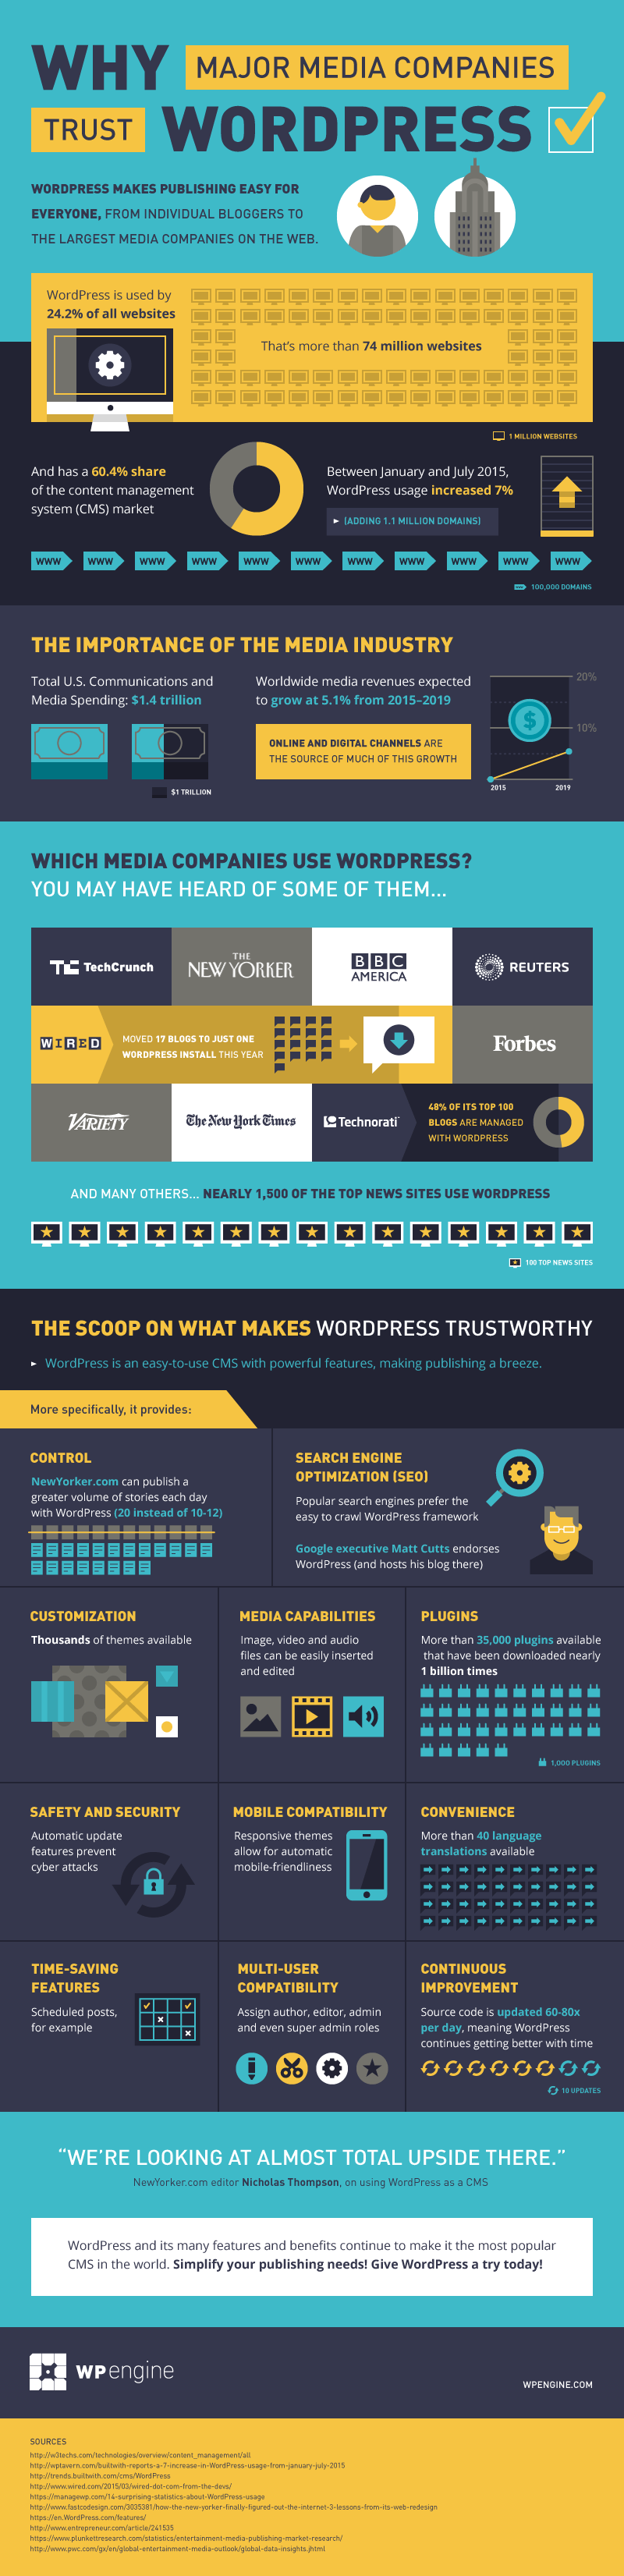 Why Major Media Companies Use WordPress - Infographic